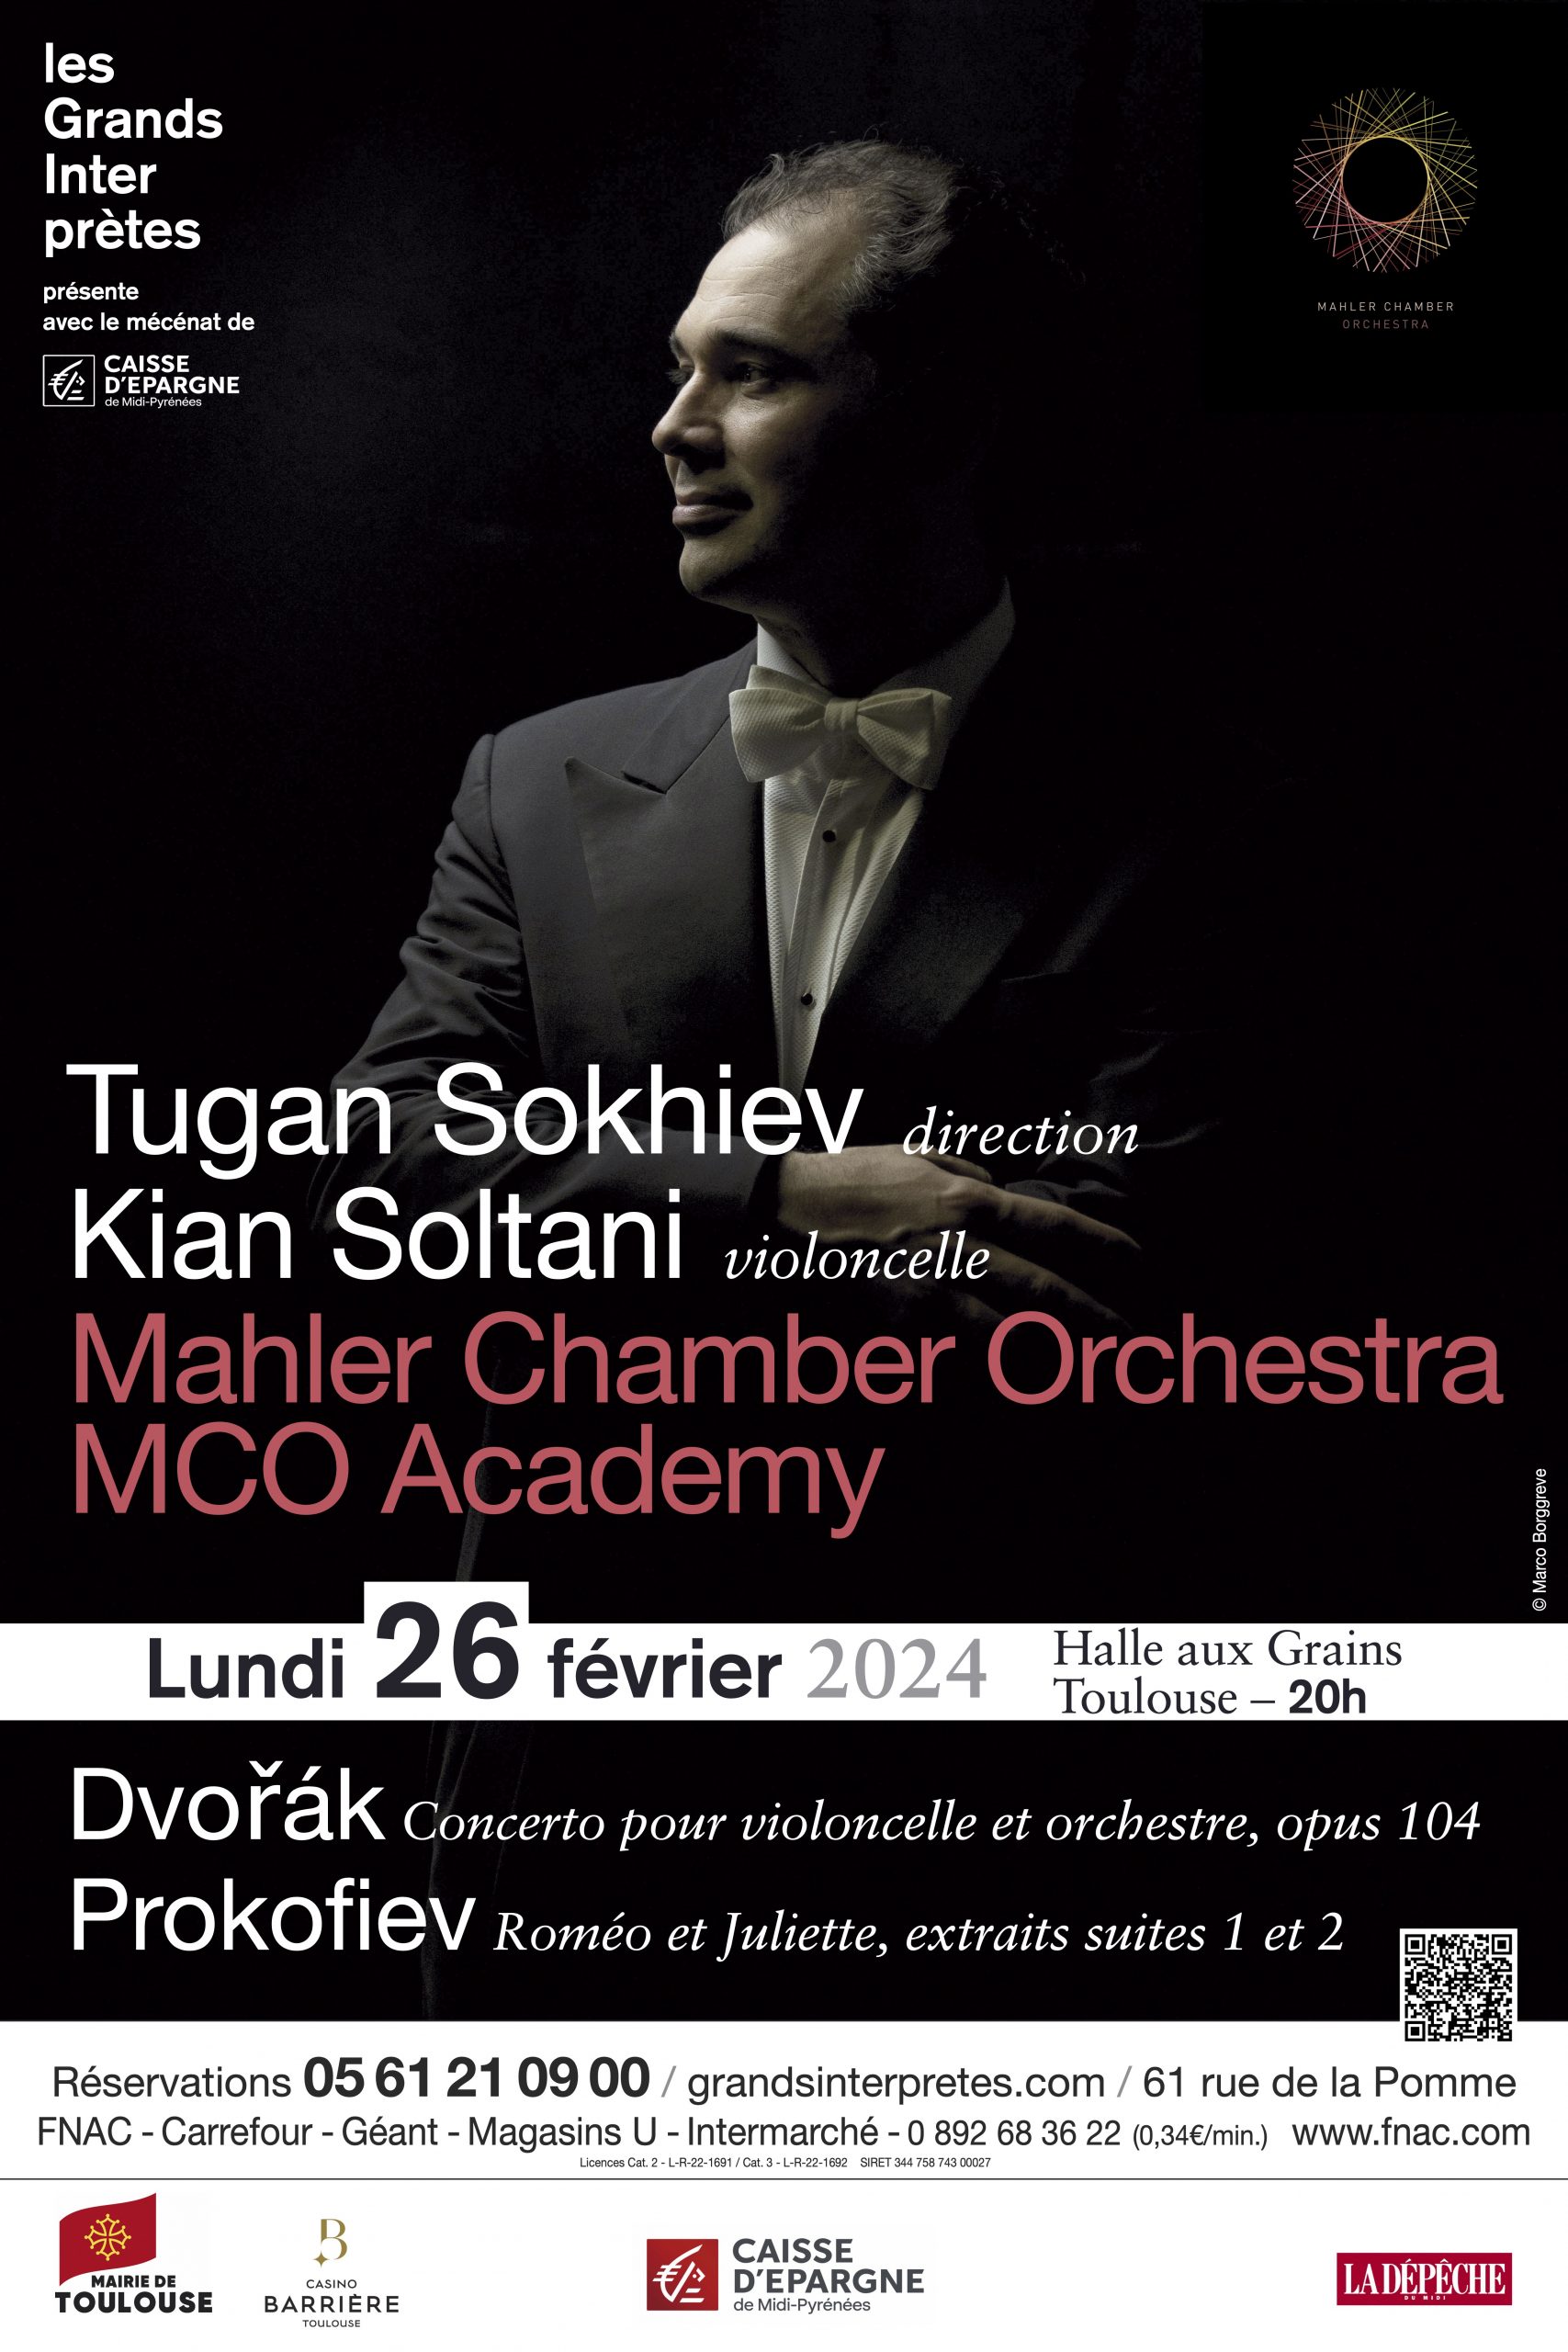 Les Grands Interprètes Tugan Sokhiev Et Mahler Chamber Orchestra